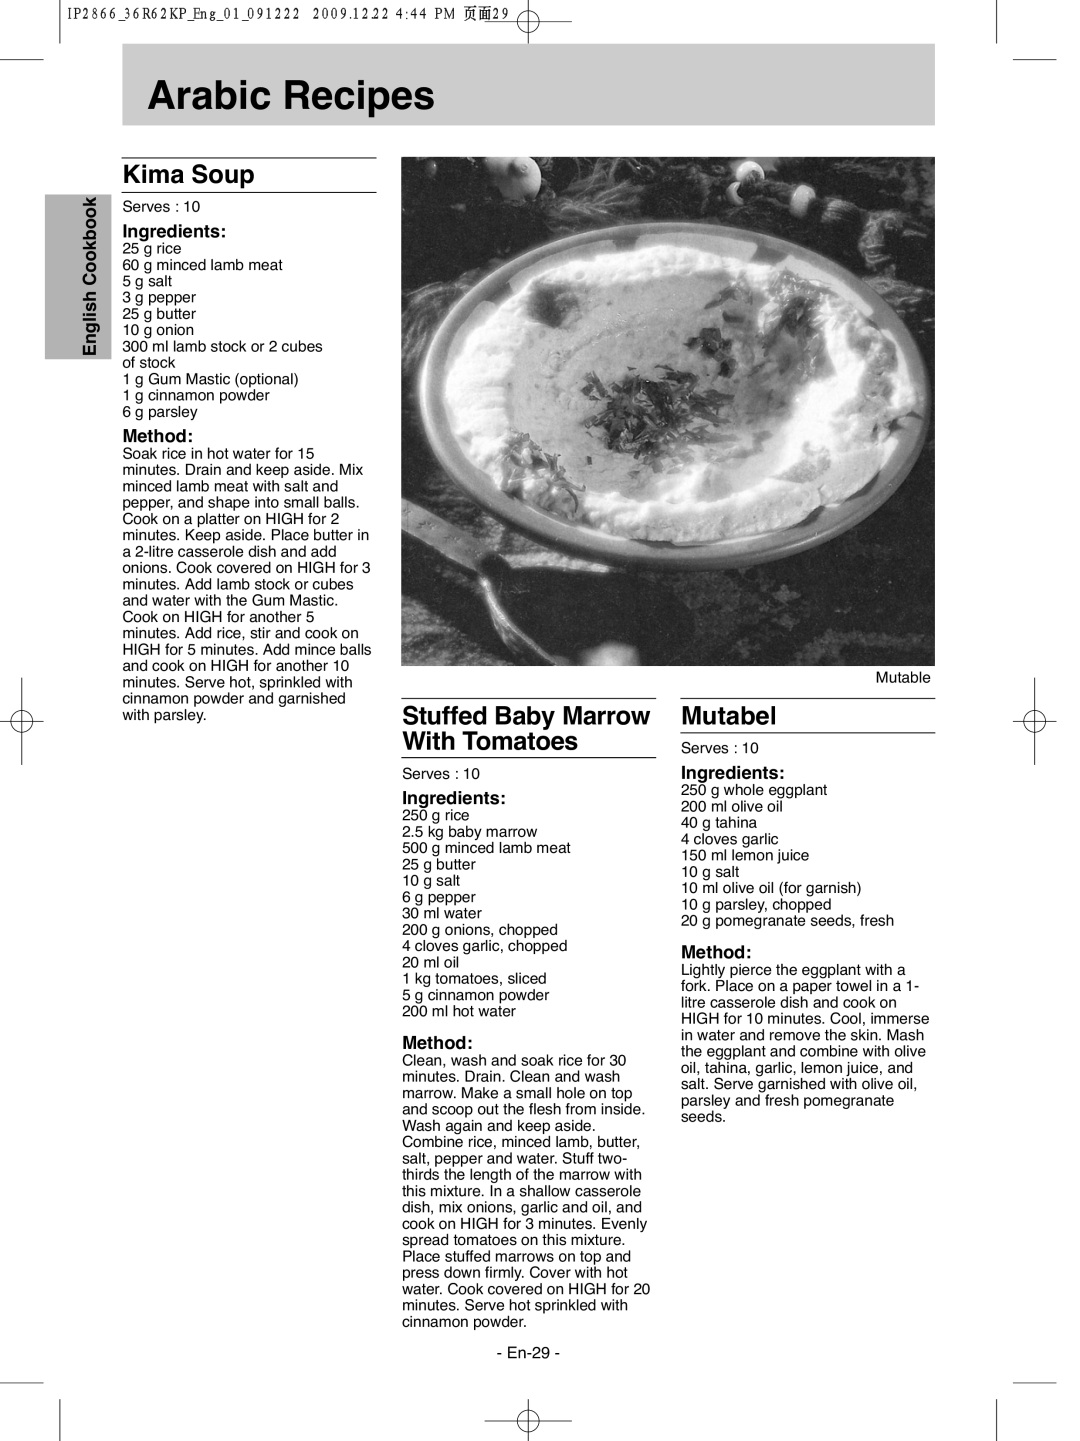 Panasonic NN-G335WF manual Arabic Recipes, Kima Soup, Mutabel, Stuffed Baby Marrow With Tomatoes, Mutable 